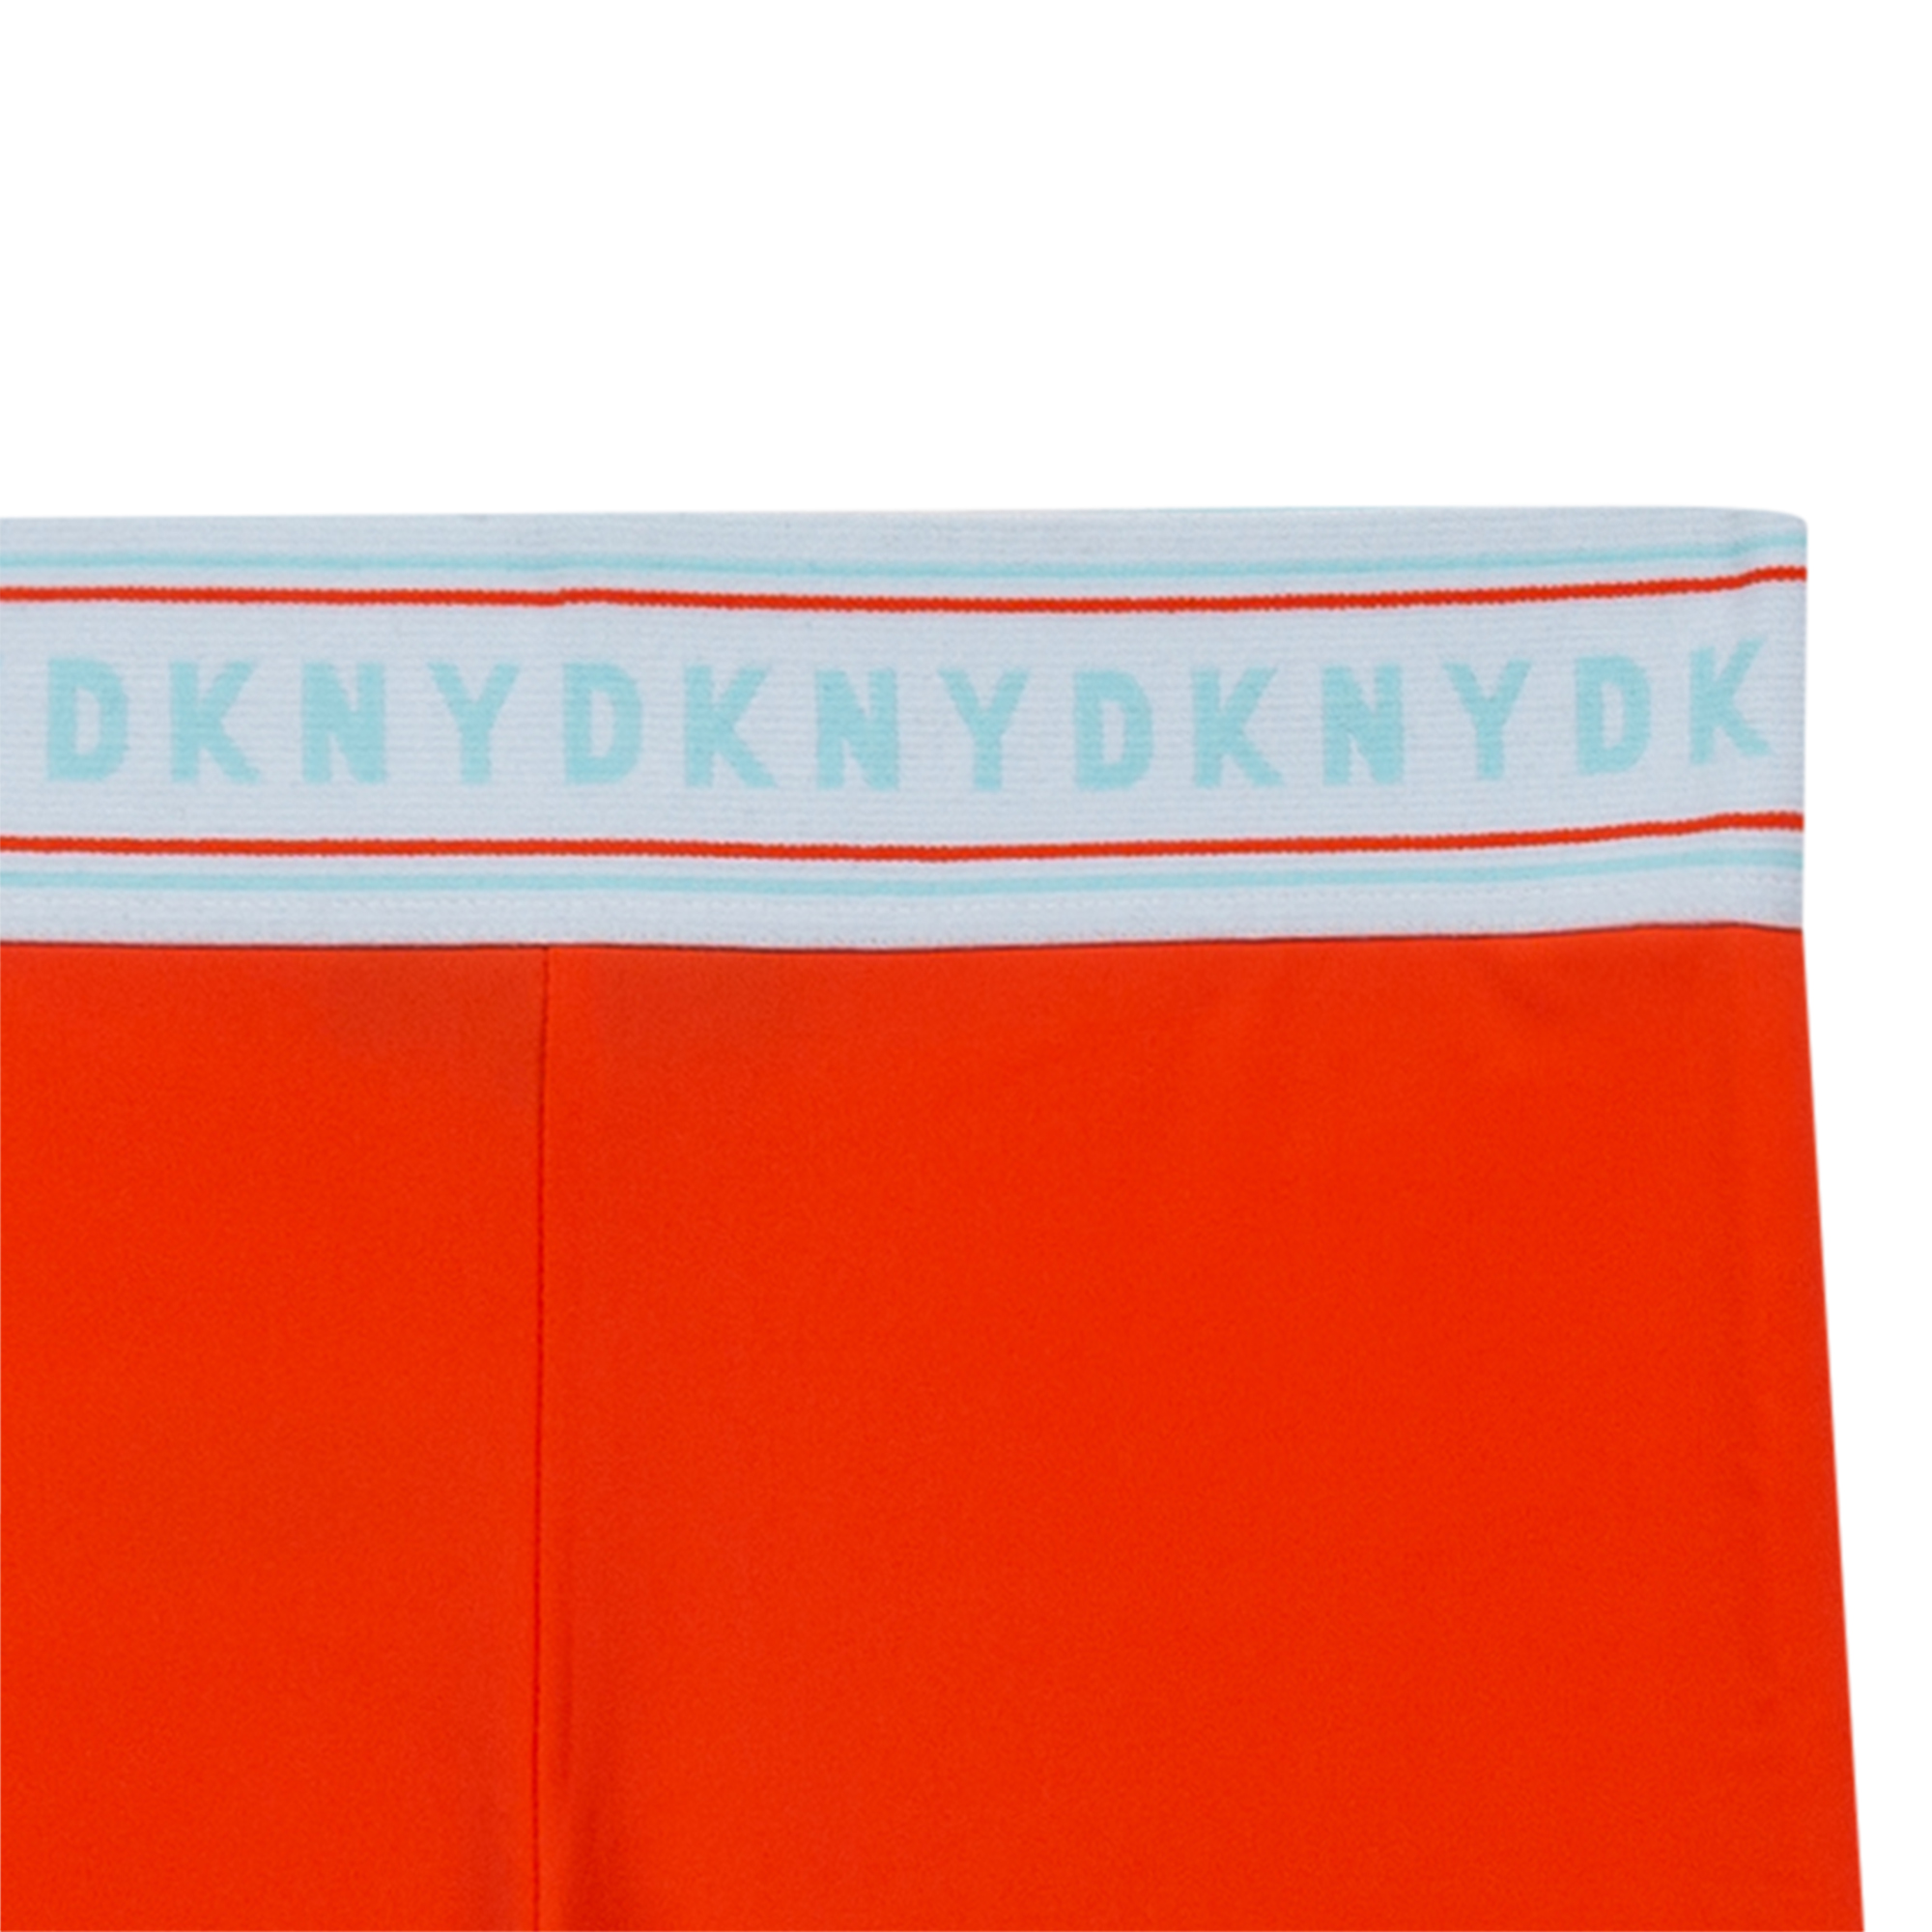 elastic-waist cycling shorts DKNY for GIRL